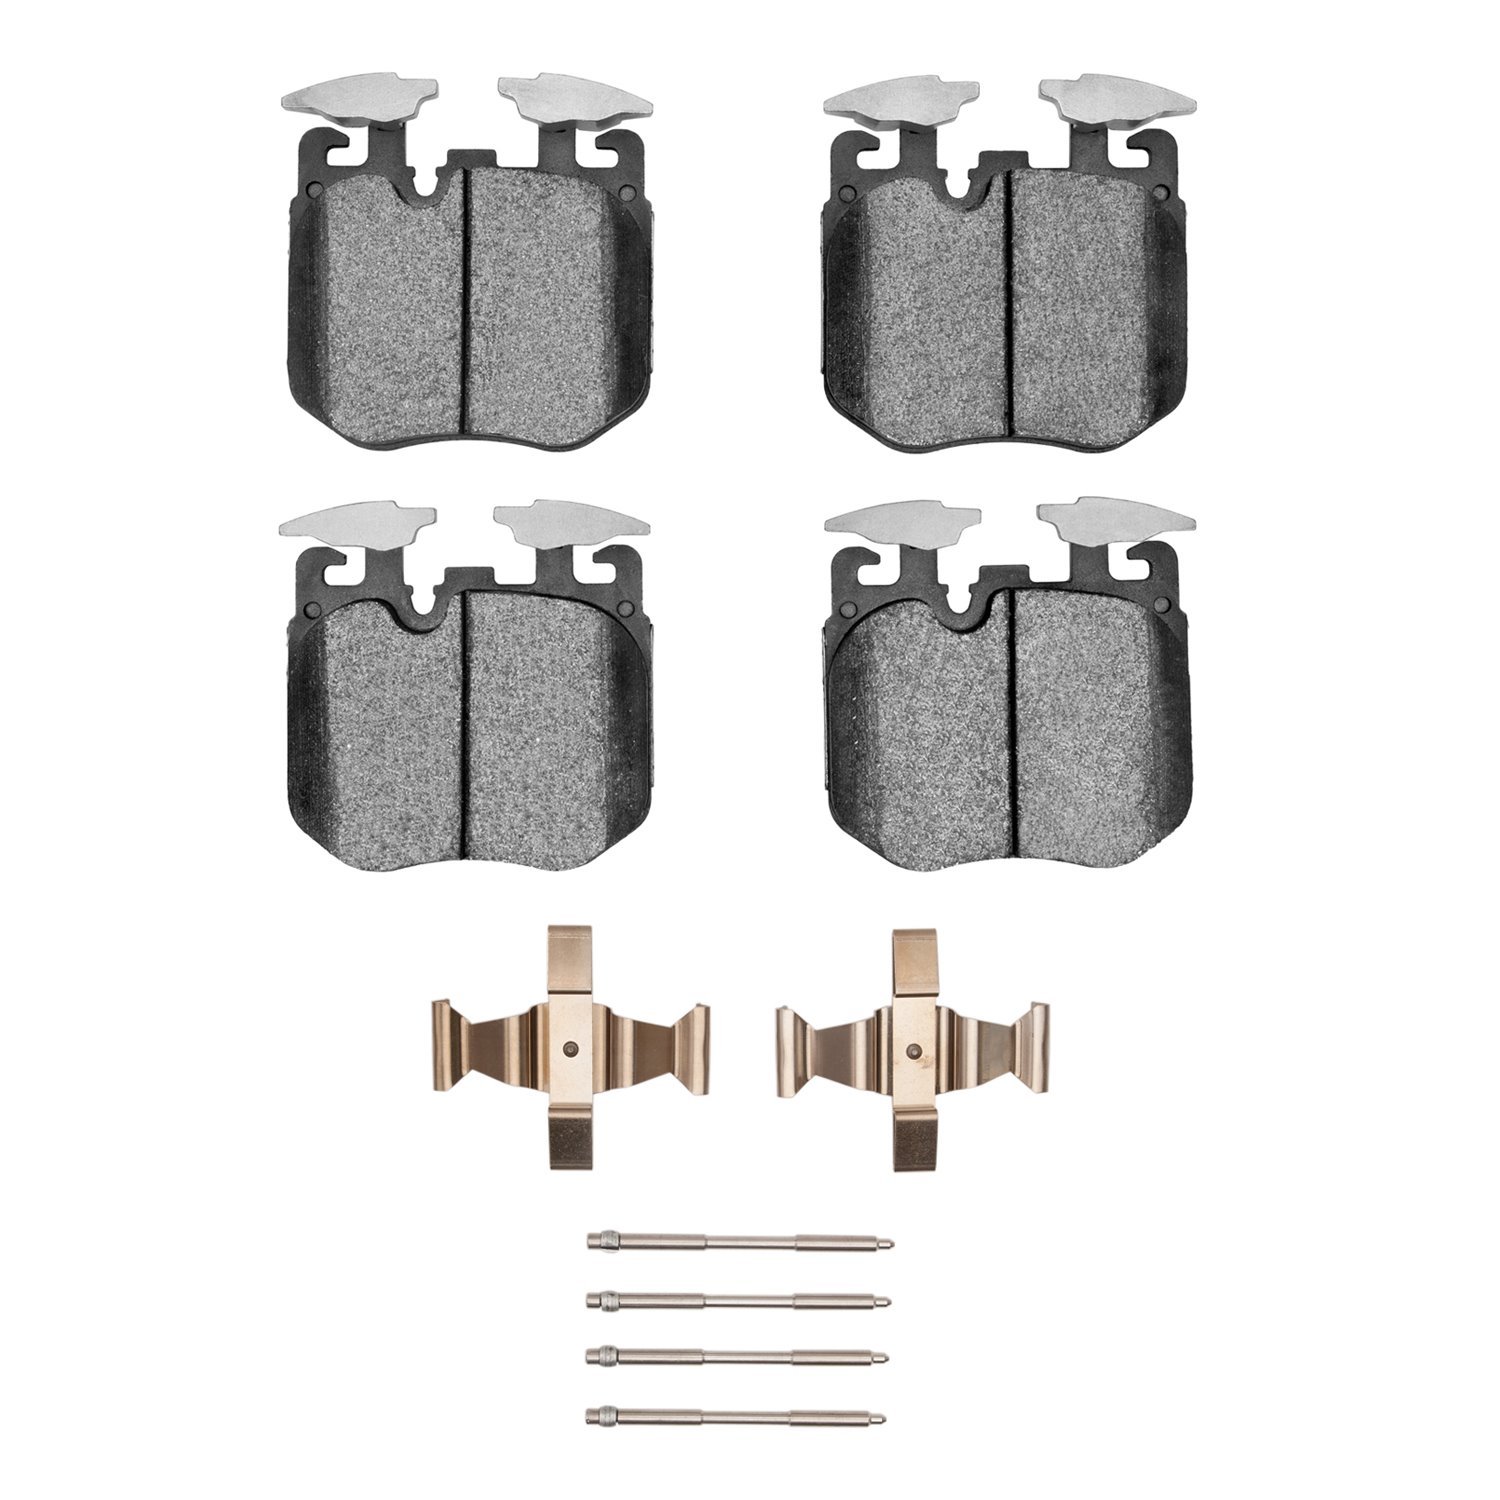 Semi-Metallic Brake Pads & Hardware Kit, Fits Select Fits Multiple Makes/Models, Position: Front